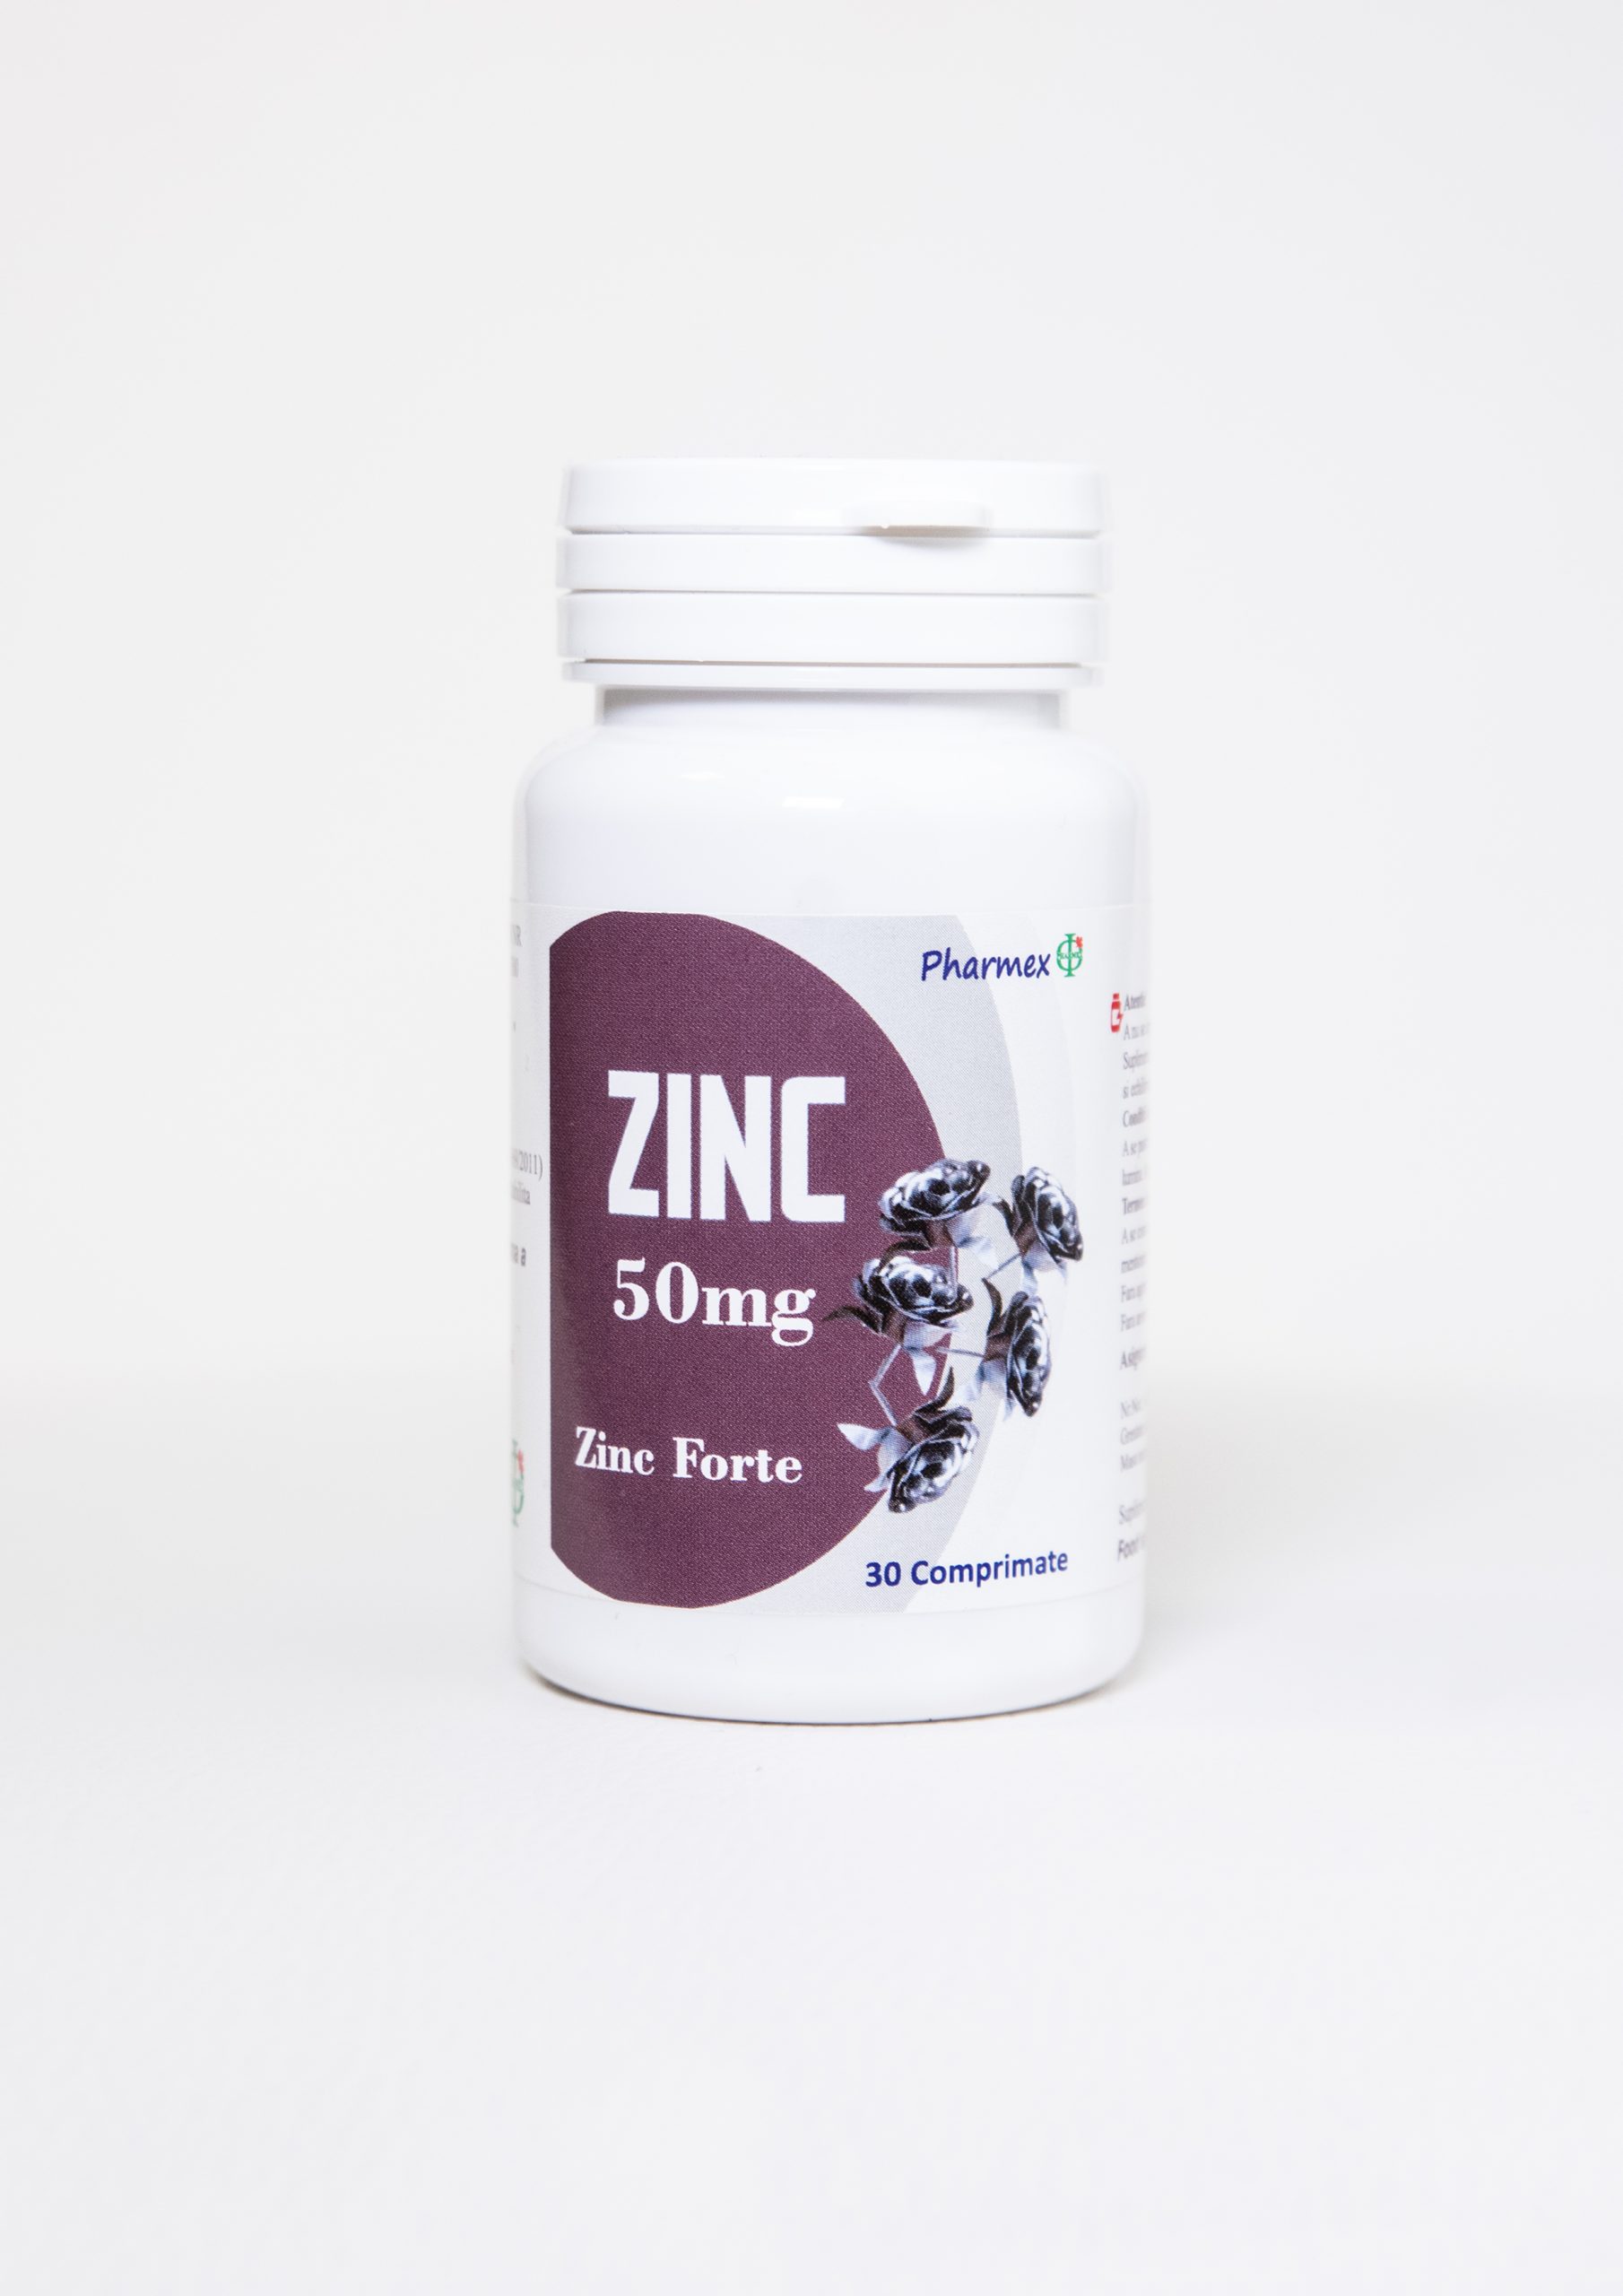 ANTIOXIDANTI - Zinc forte 50mg, 30 comprimate, Pharmex, sinapis.ro